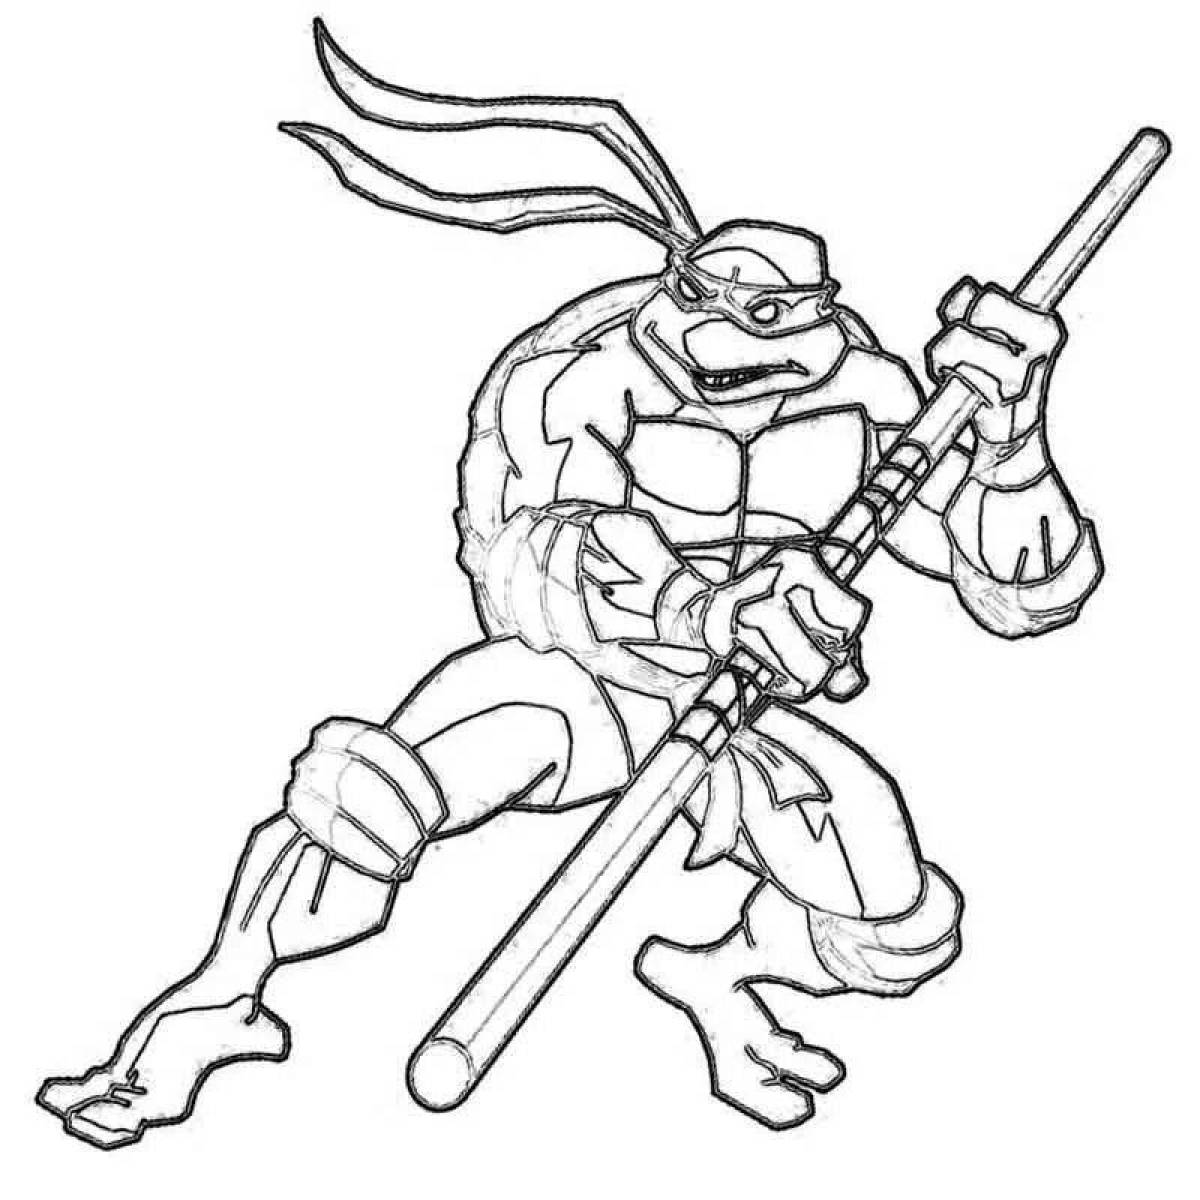 Donatello's brave ninja turtles coloring book